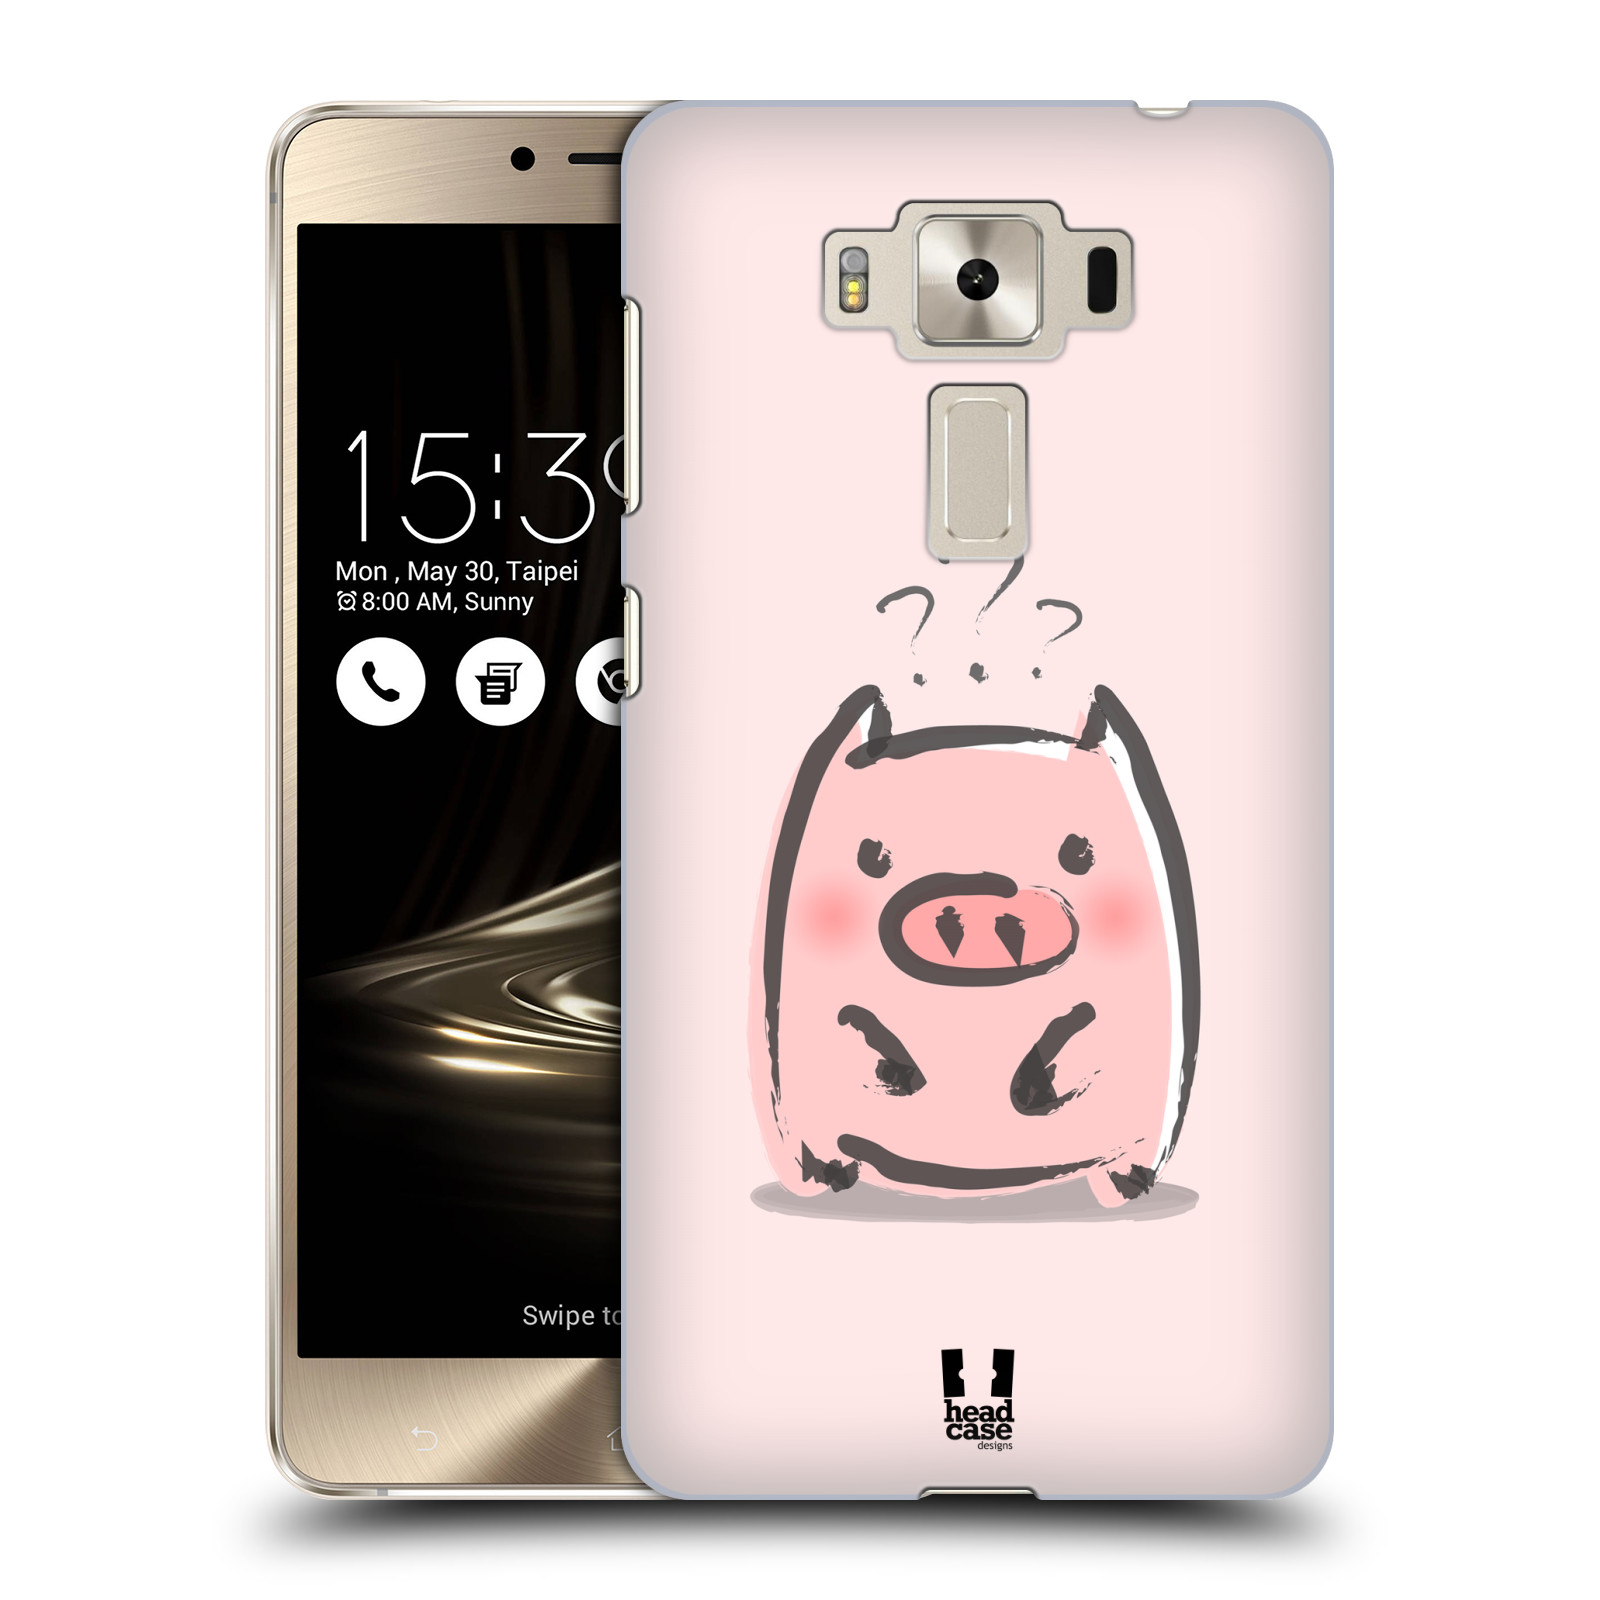 HEAD CASE plastový obal na mobil Asus Zenfone 3 DELUXE ZS550KL vzor roztomilé růžové prasátko otazník